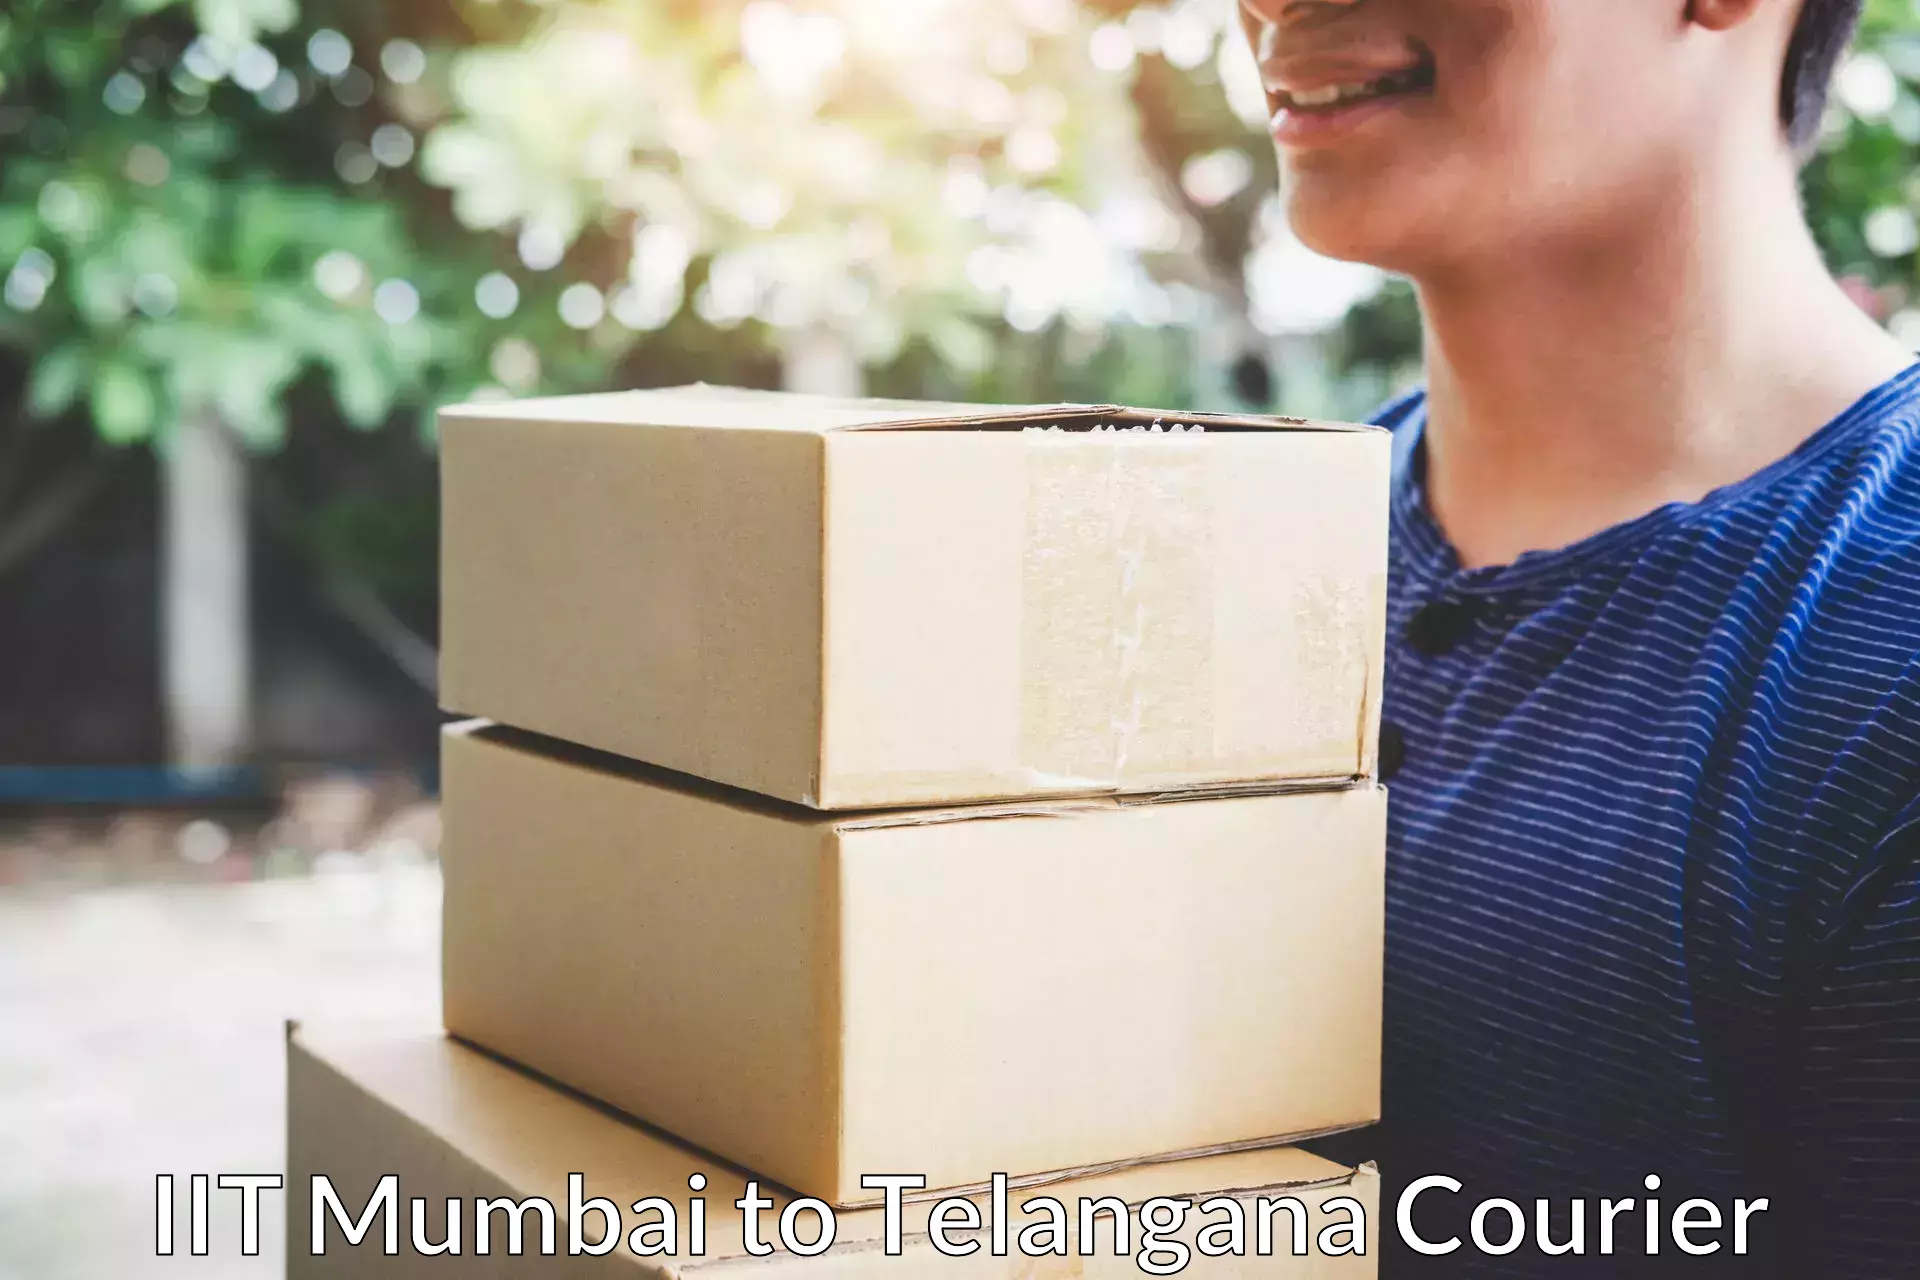 Professional packing services IIT Mumbai to Kacheguda